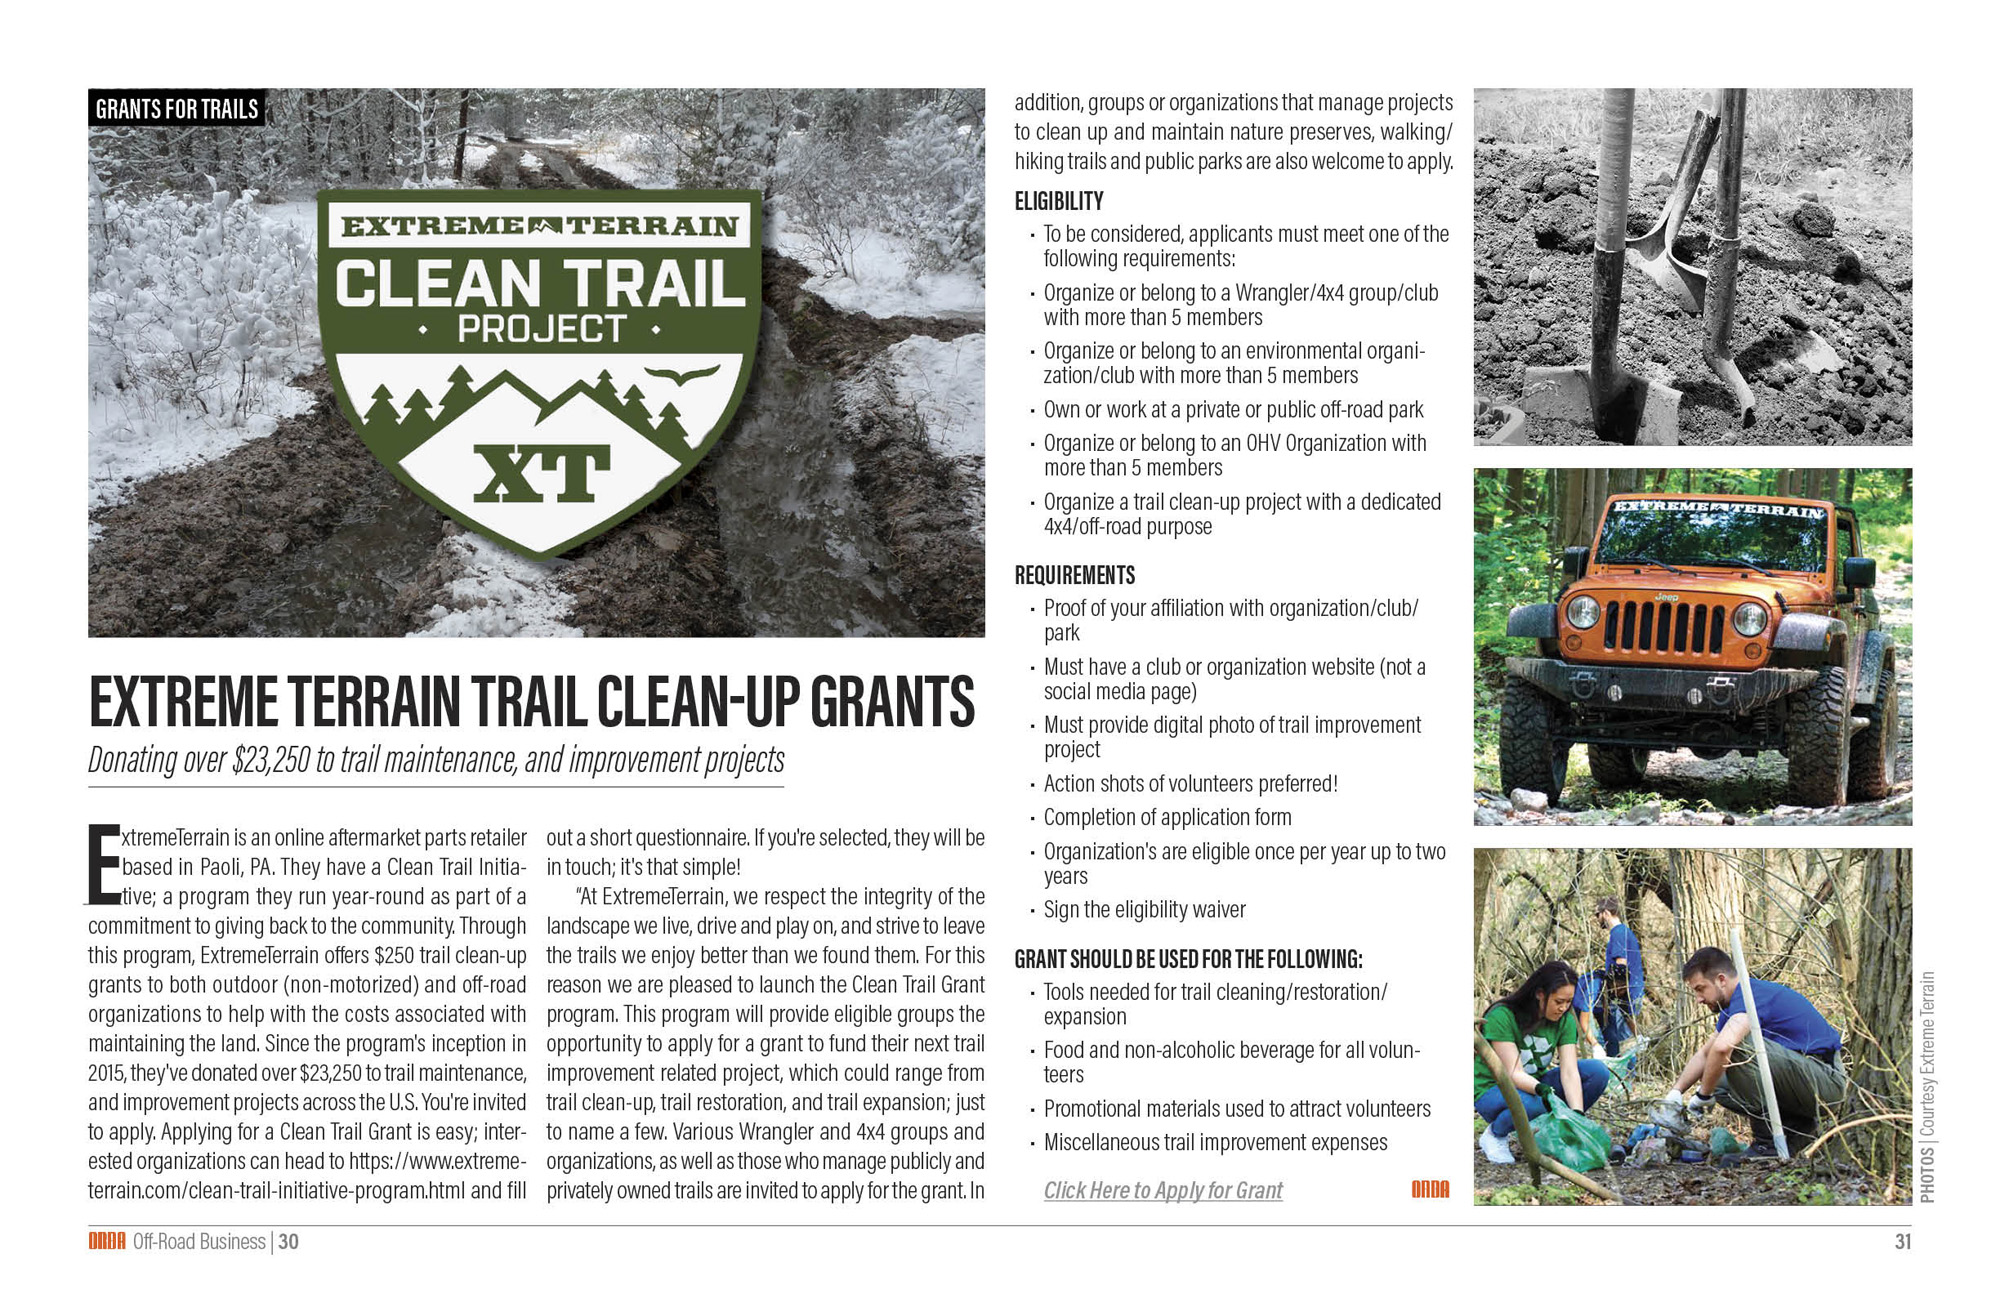 Extreme Terrain Trail Clean-up Grants